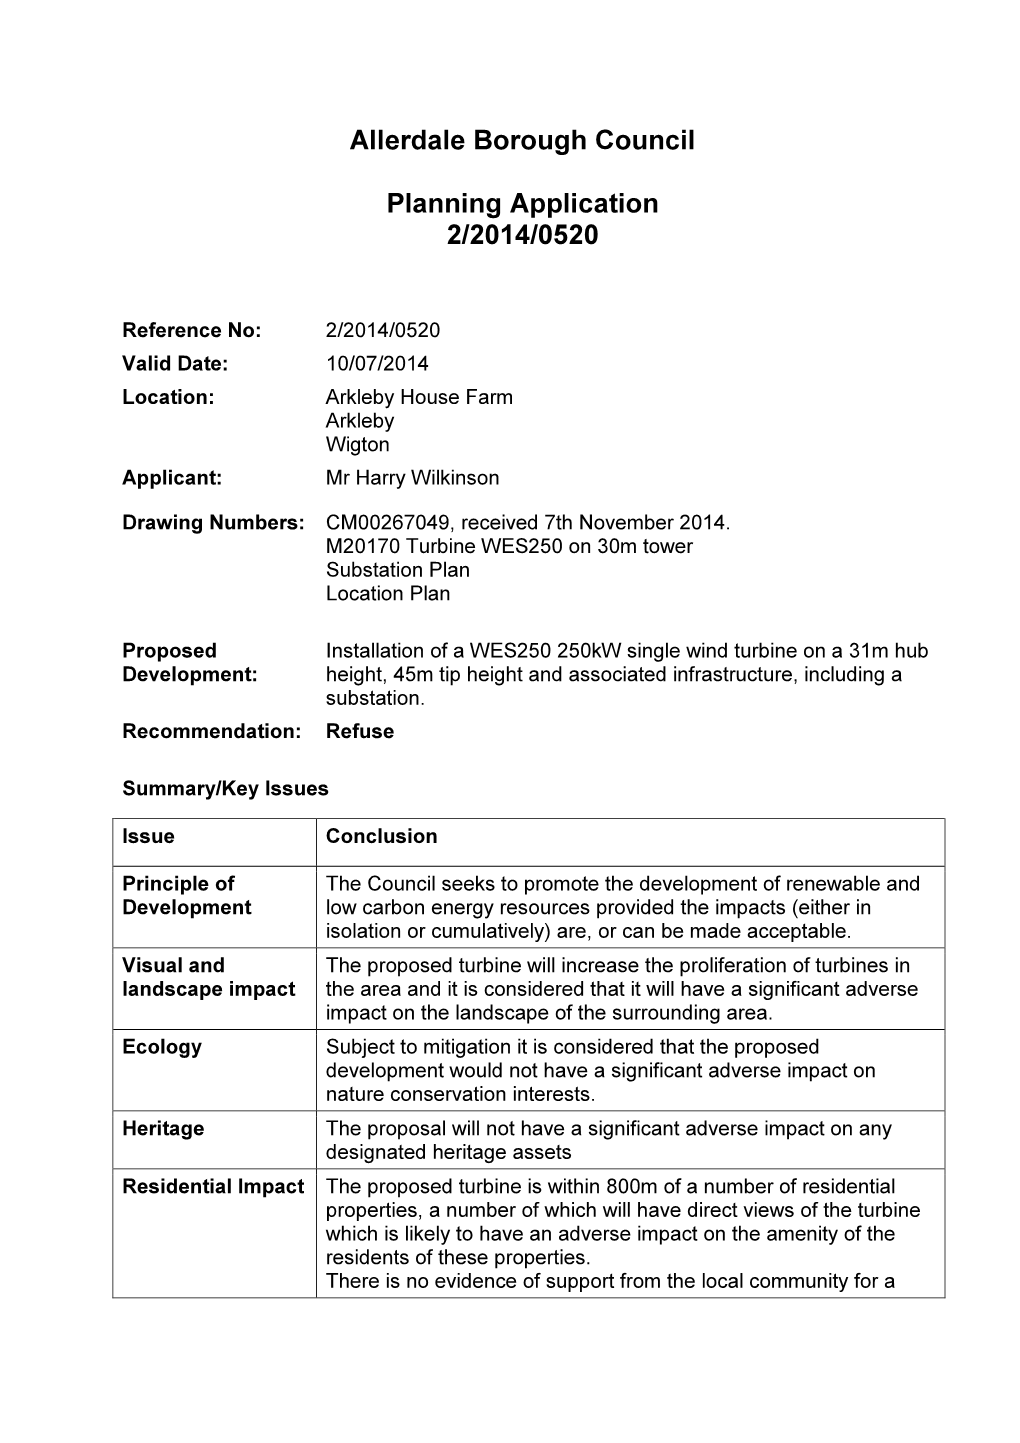 Allerdale Borough Council Planning Application 2/2014/0520